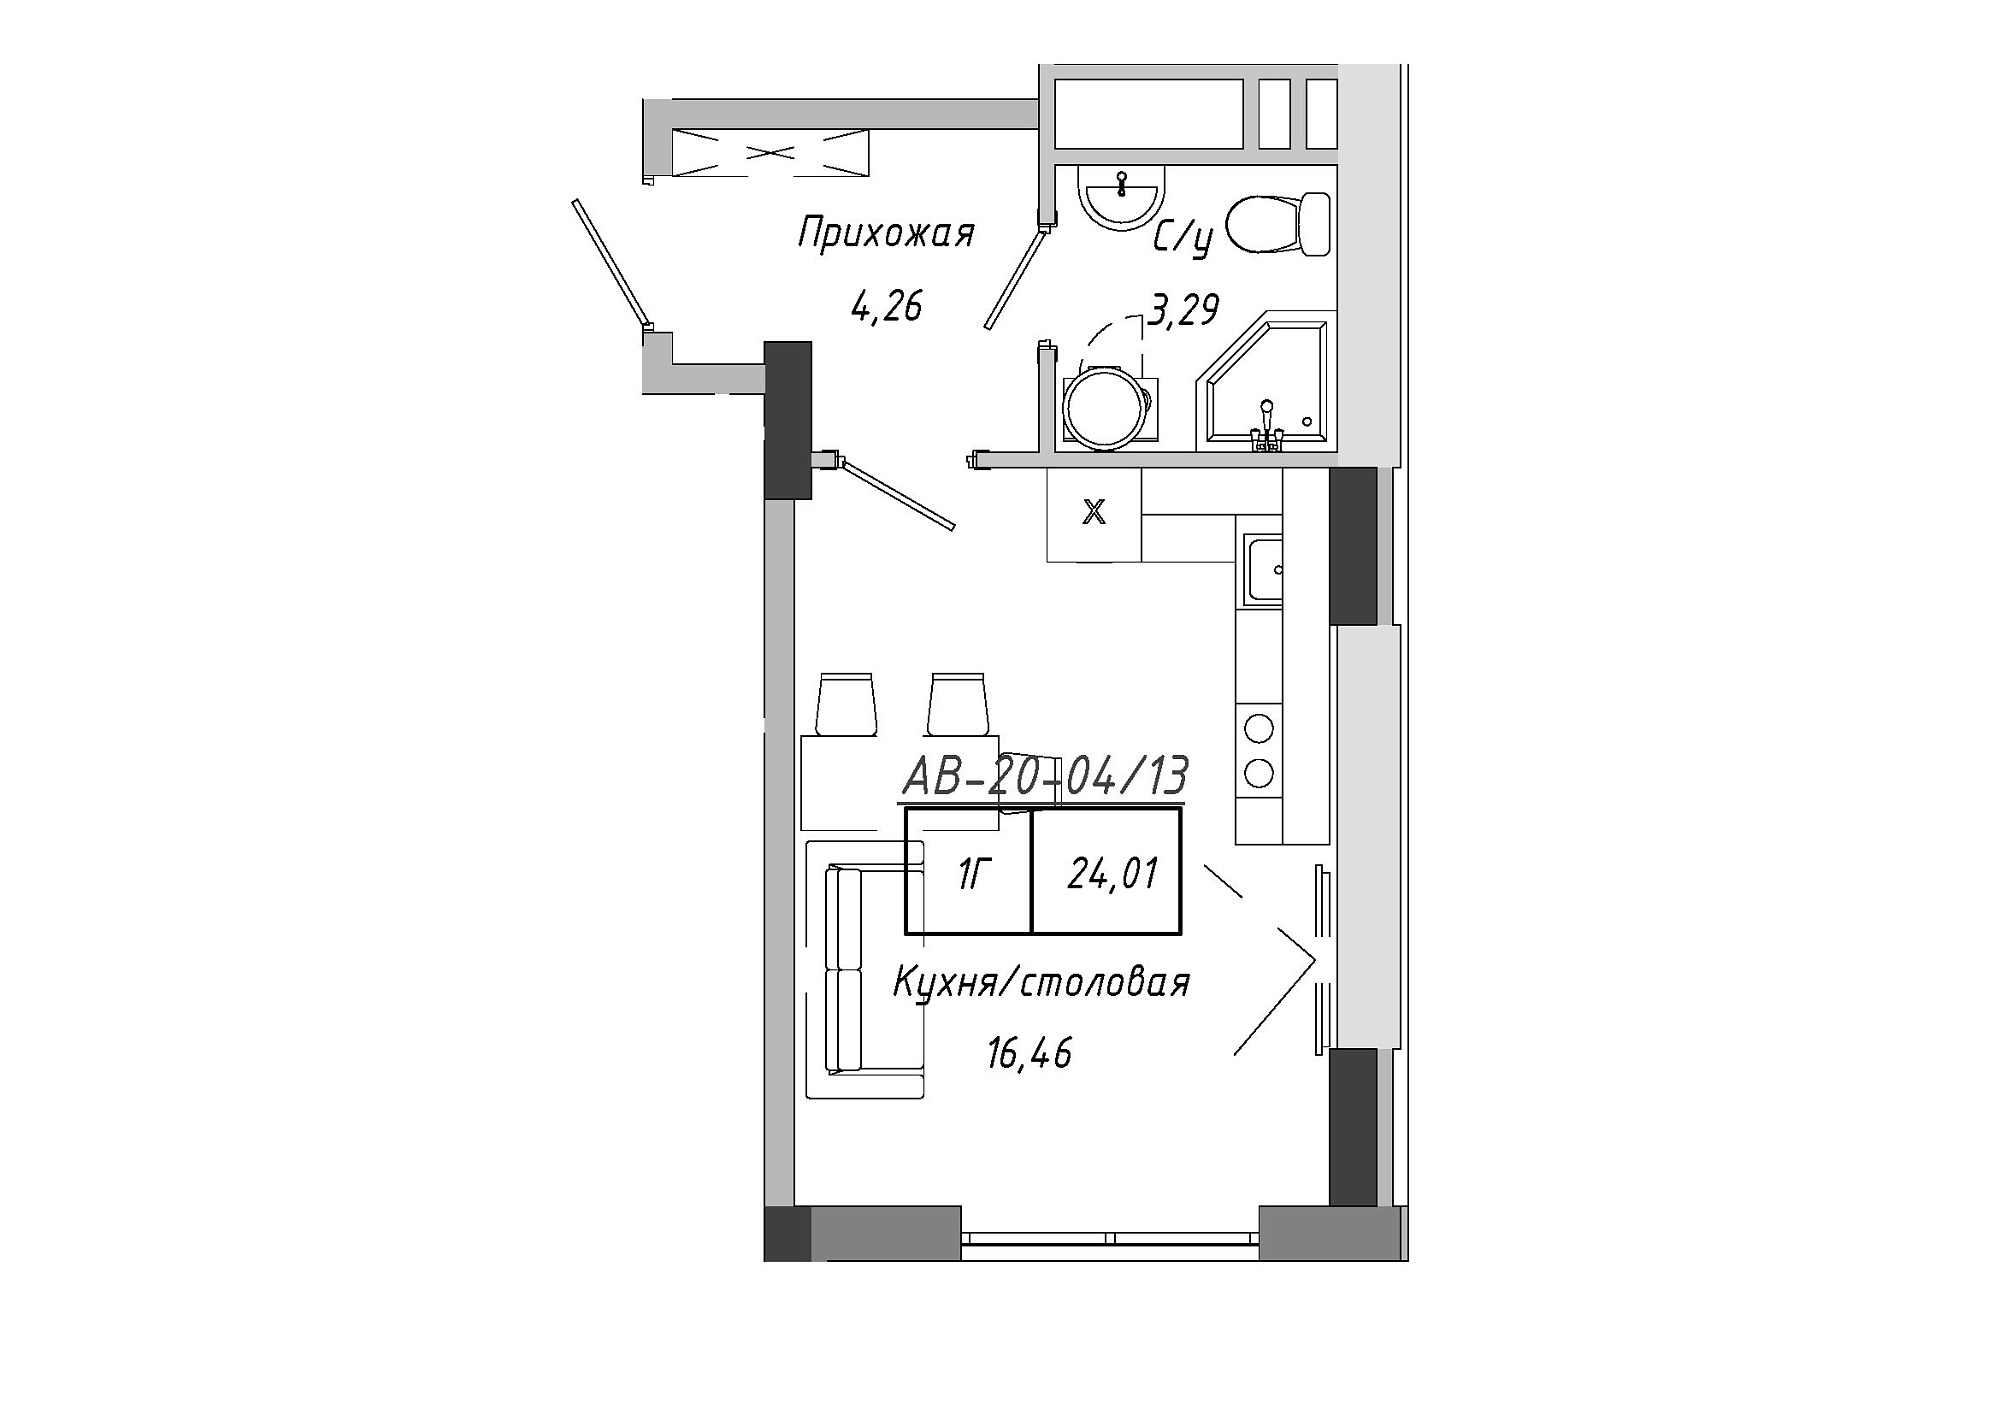 Planning Smart flats area 24.01m2, AB-20-04/00013.